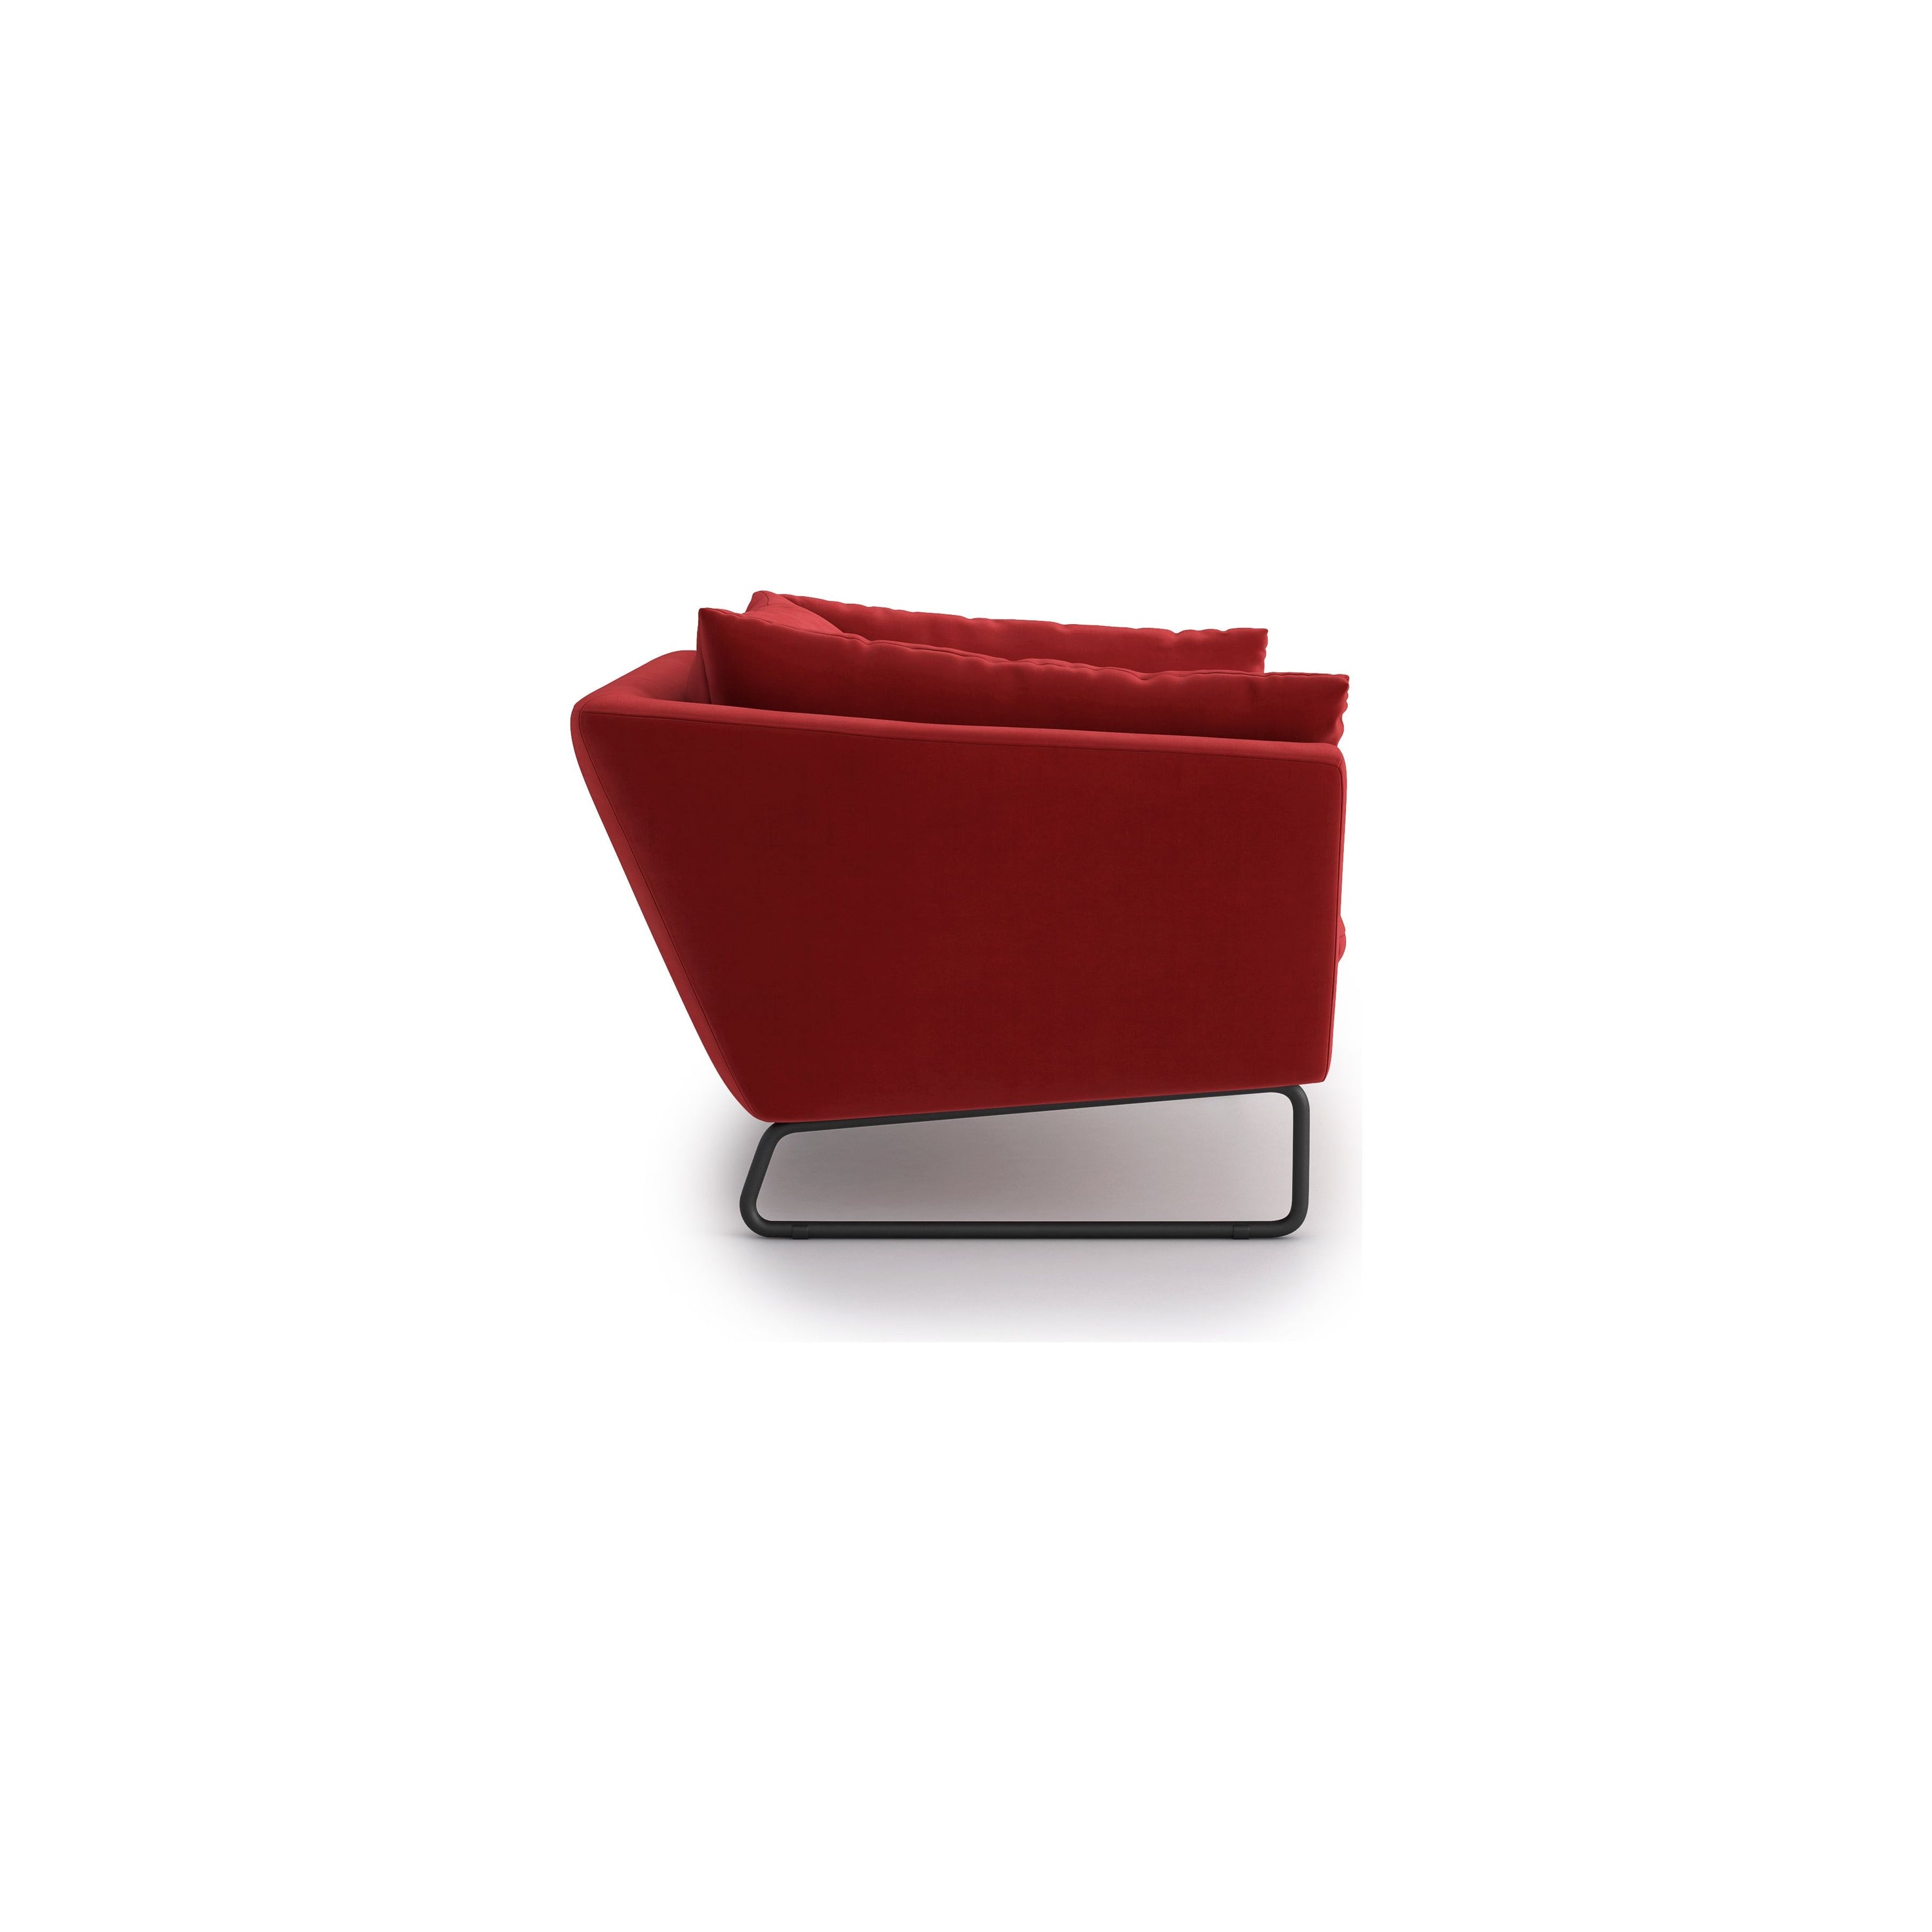 YOKO fotelis, raudona spalva